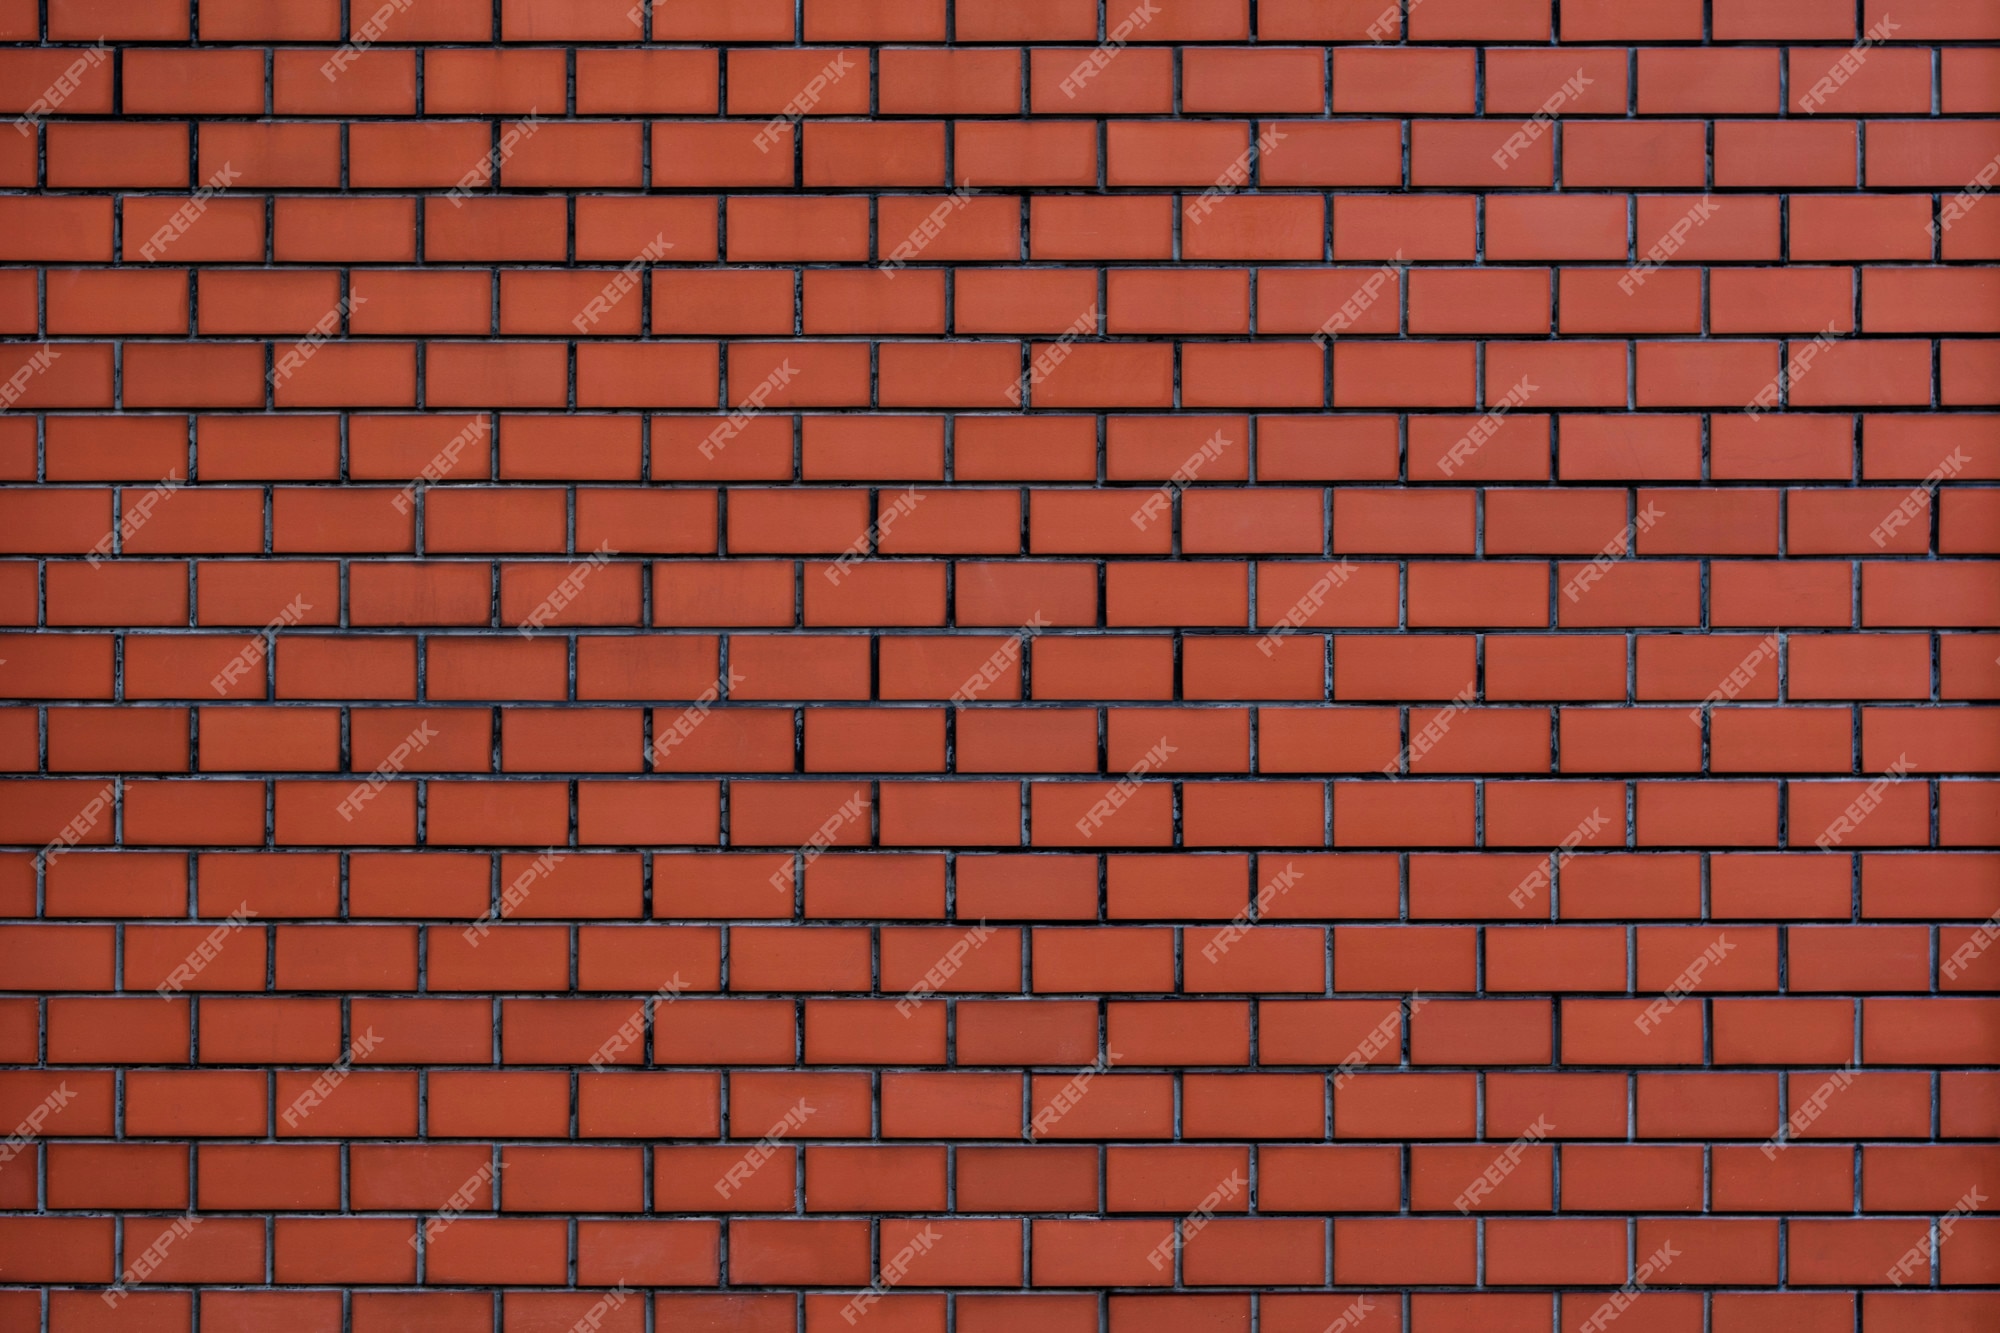 Brick Wall Images Free Download on Freepik